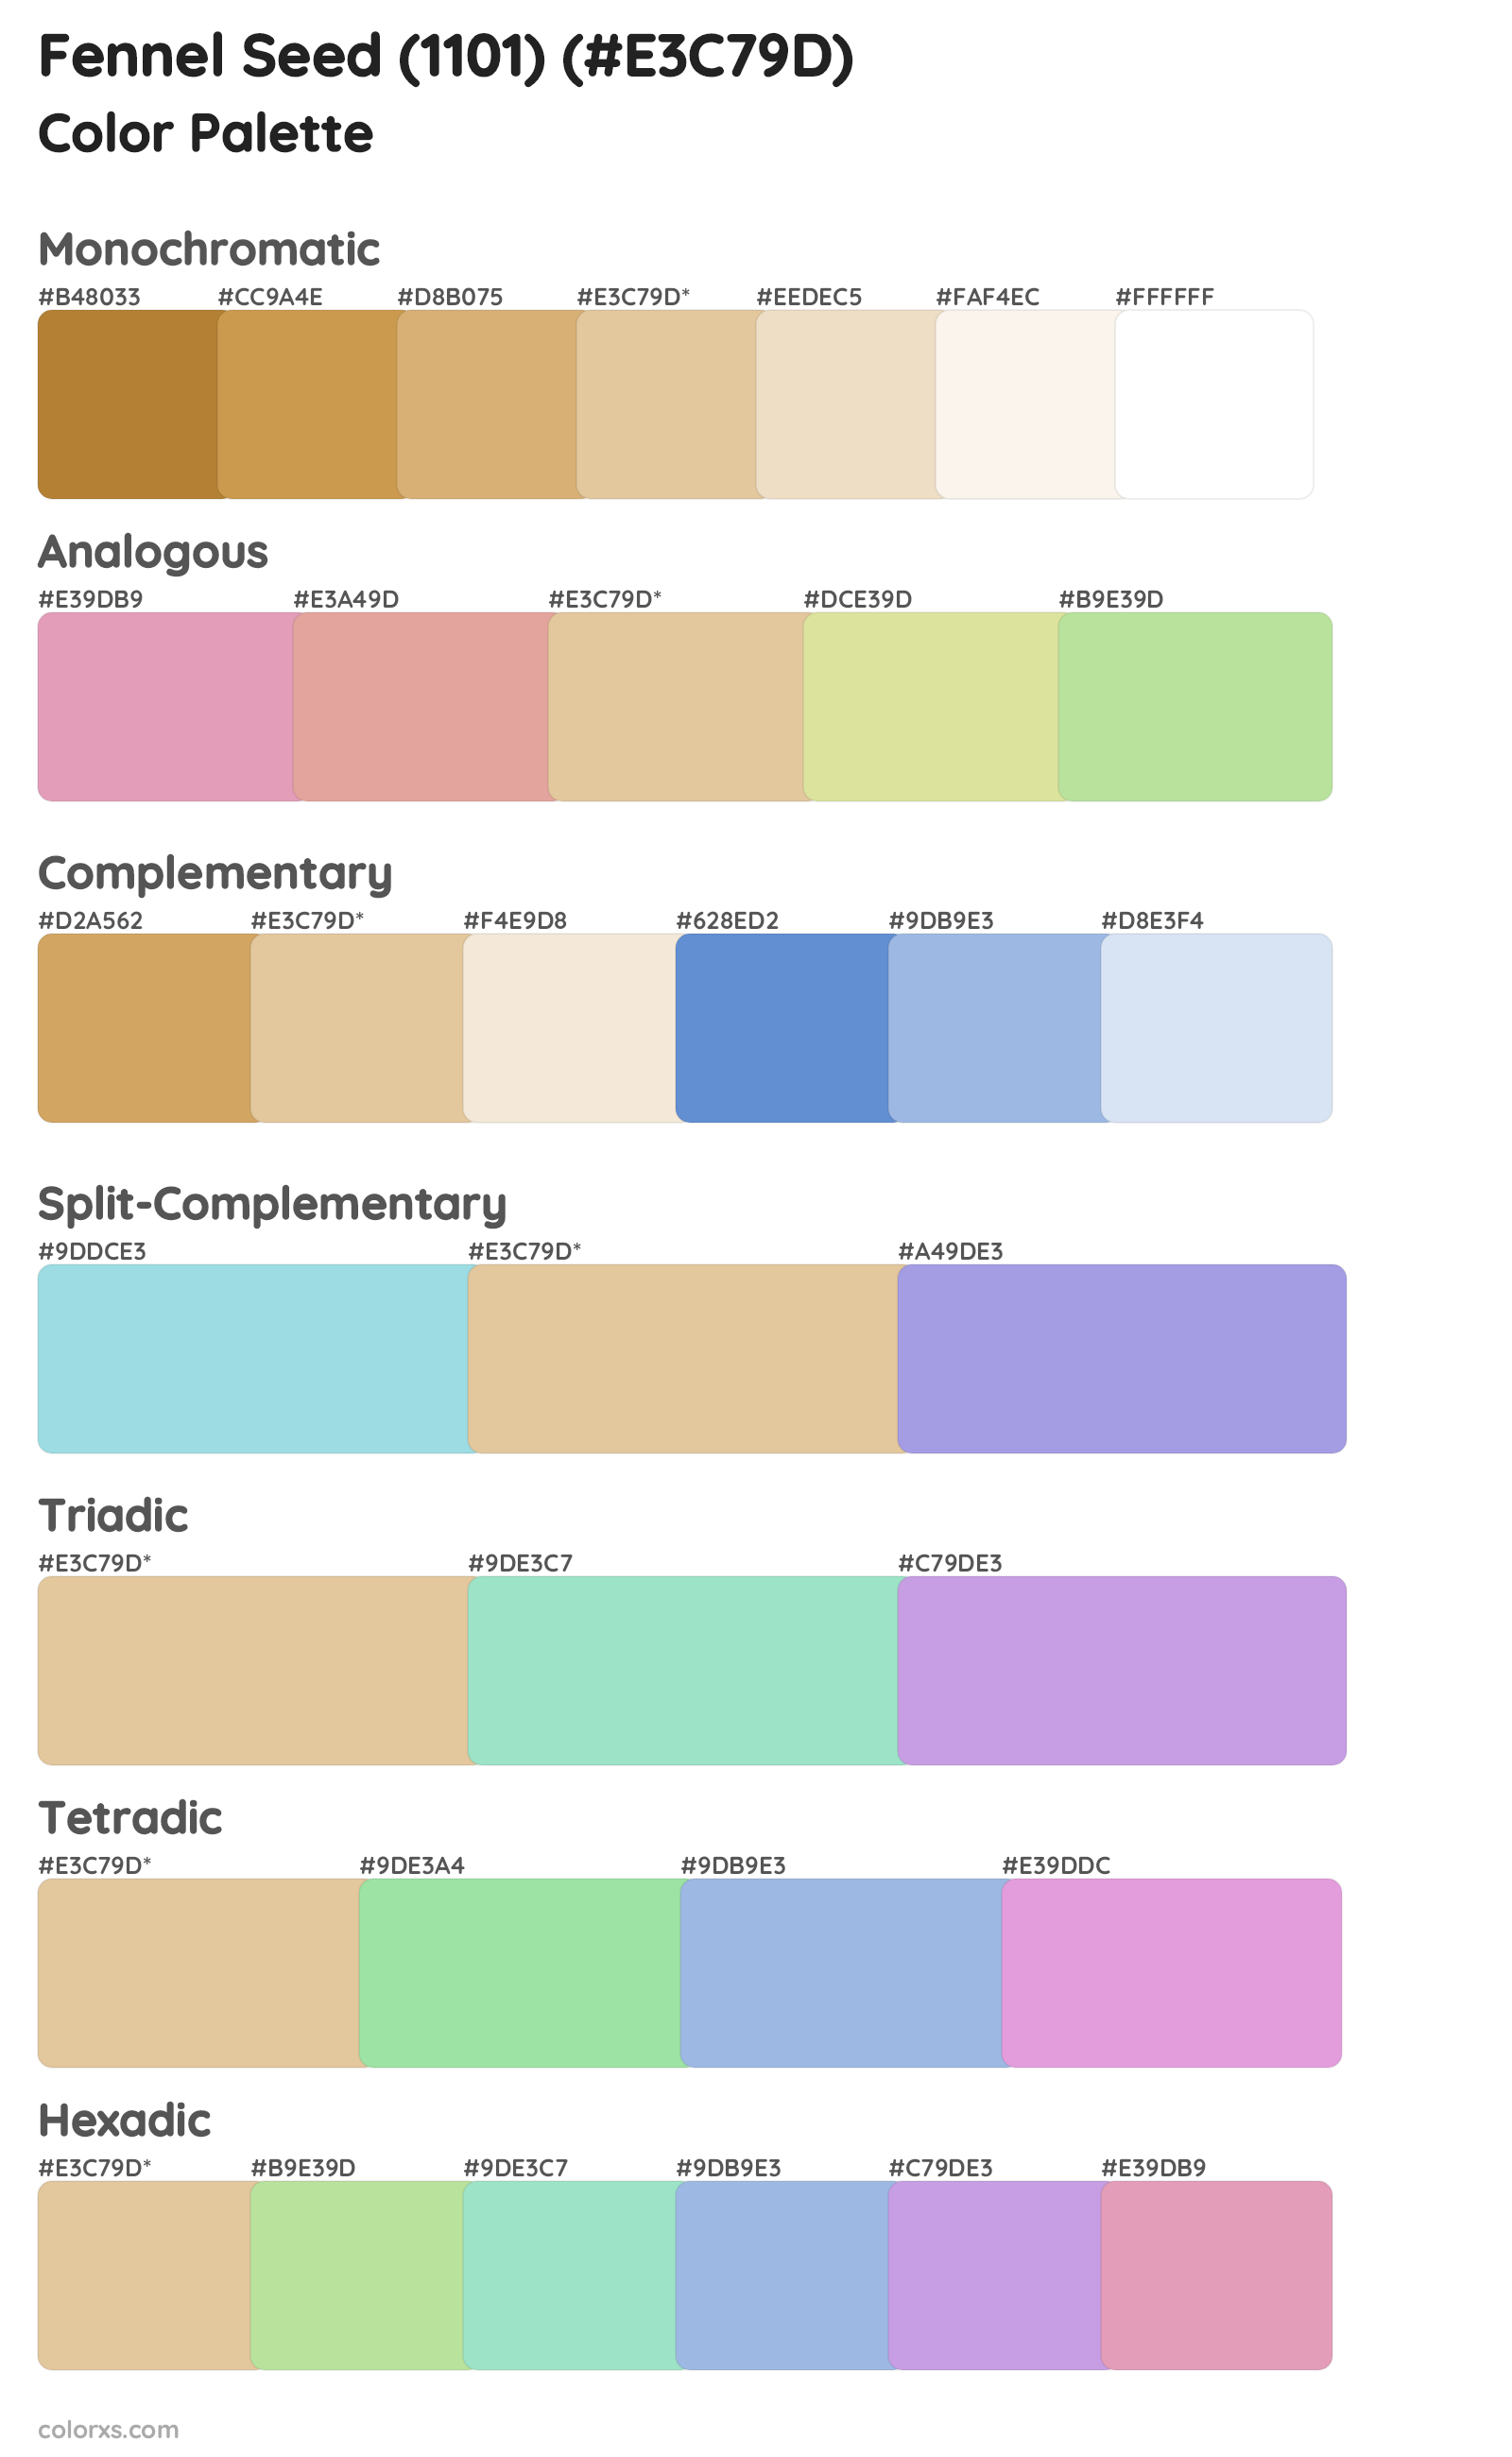 Fennel Seed (1101) Color Scheme Palettes